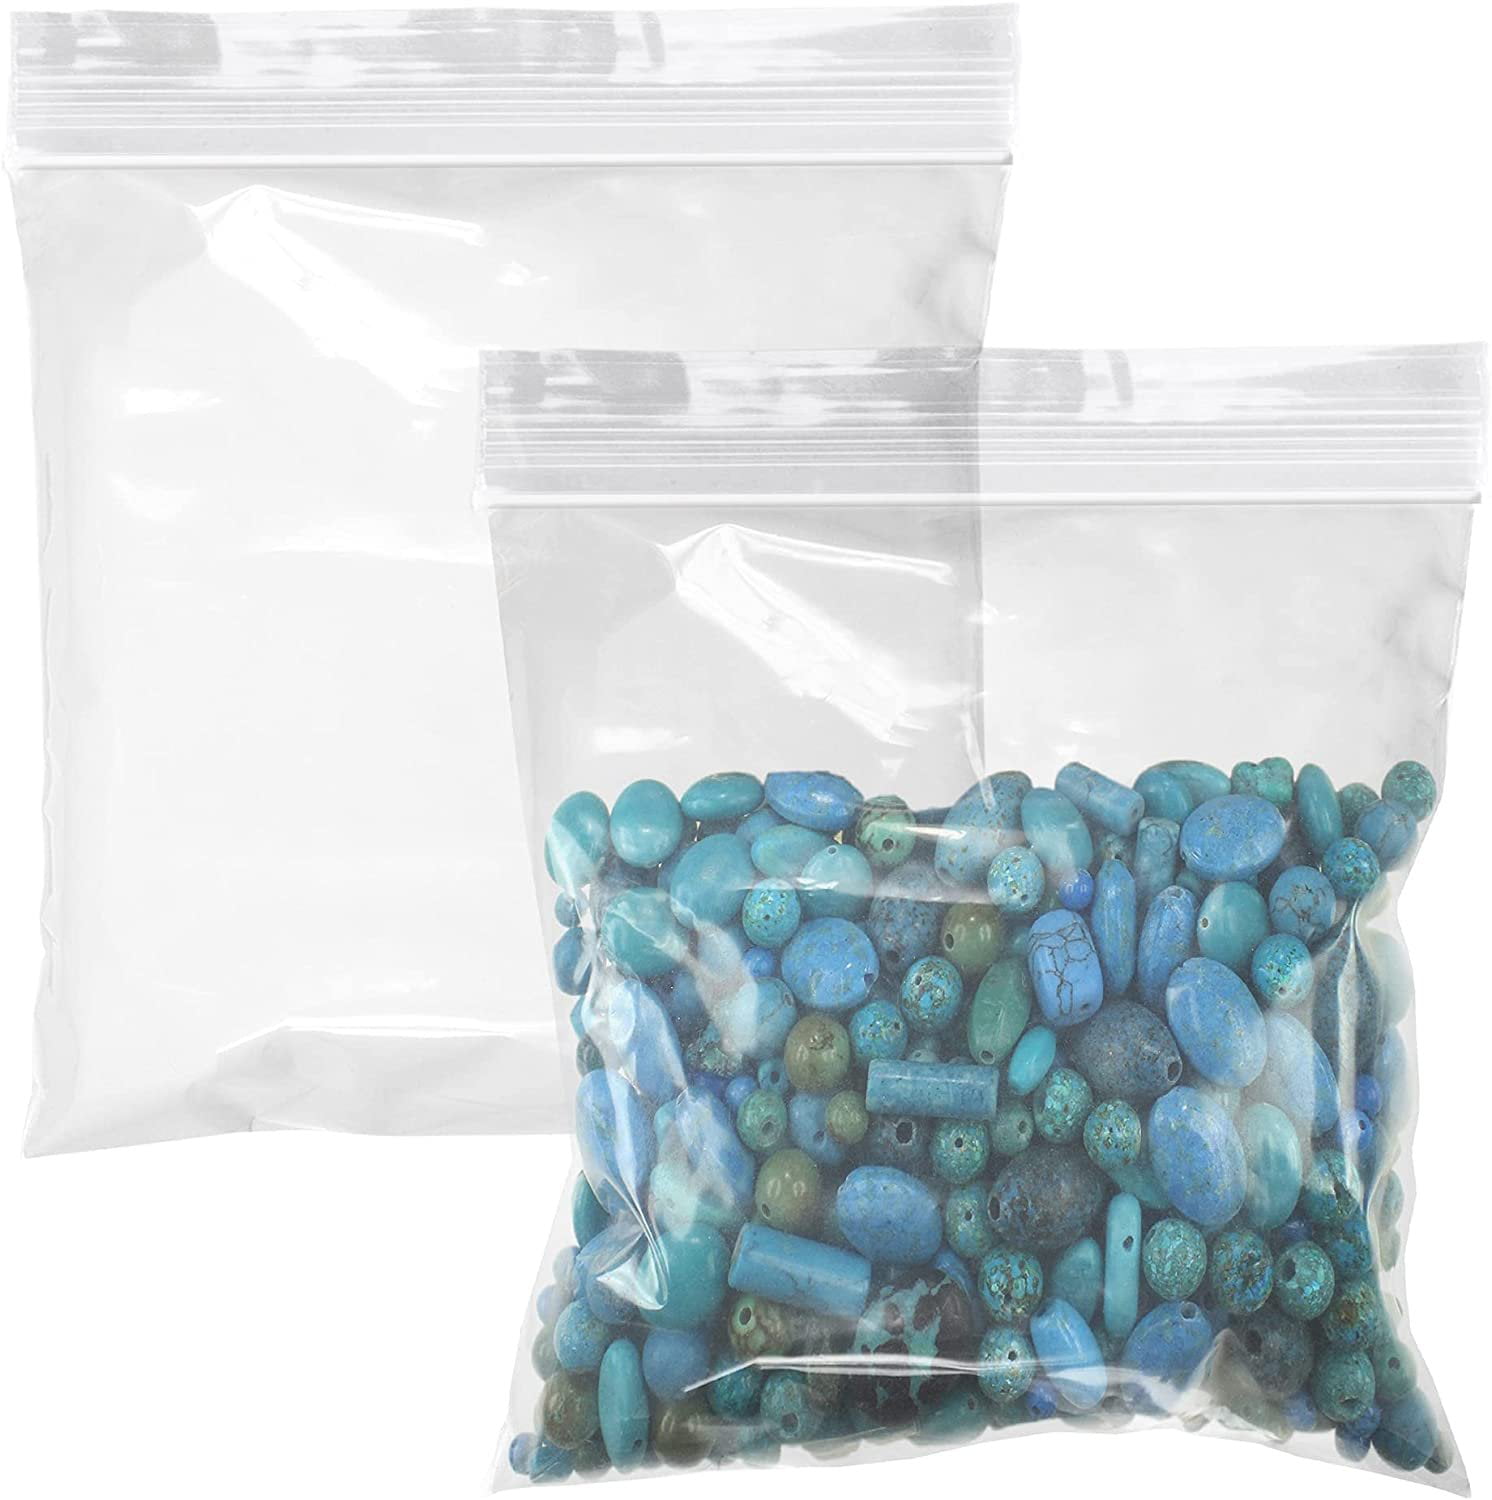 100 Pcs Clear Zip Seal Lock able Seal Bags Poly Plastic ReUsable Food Baggies 